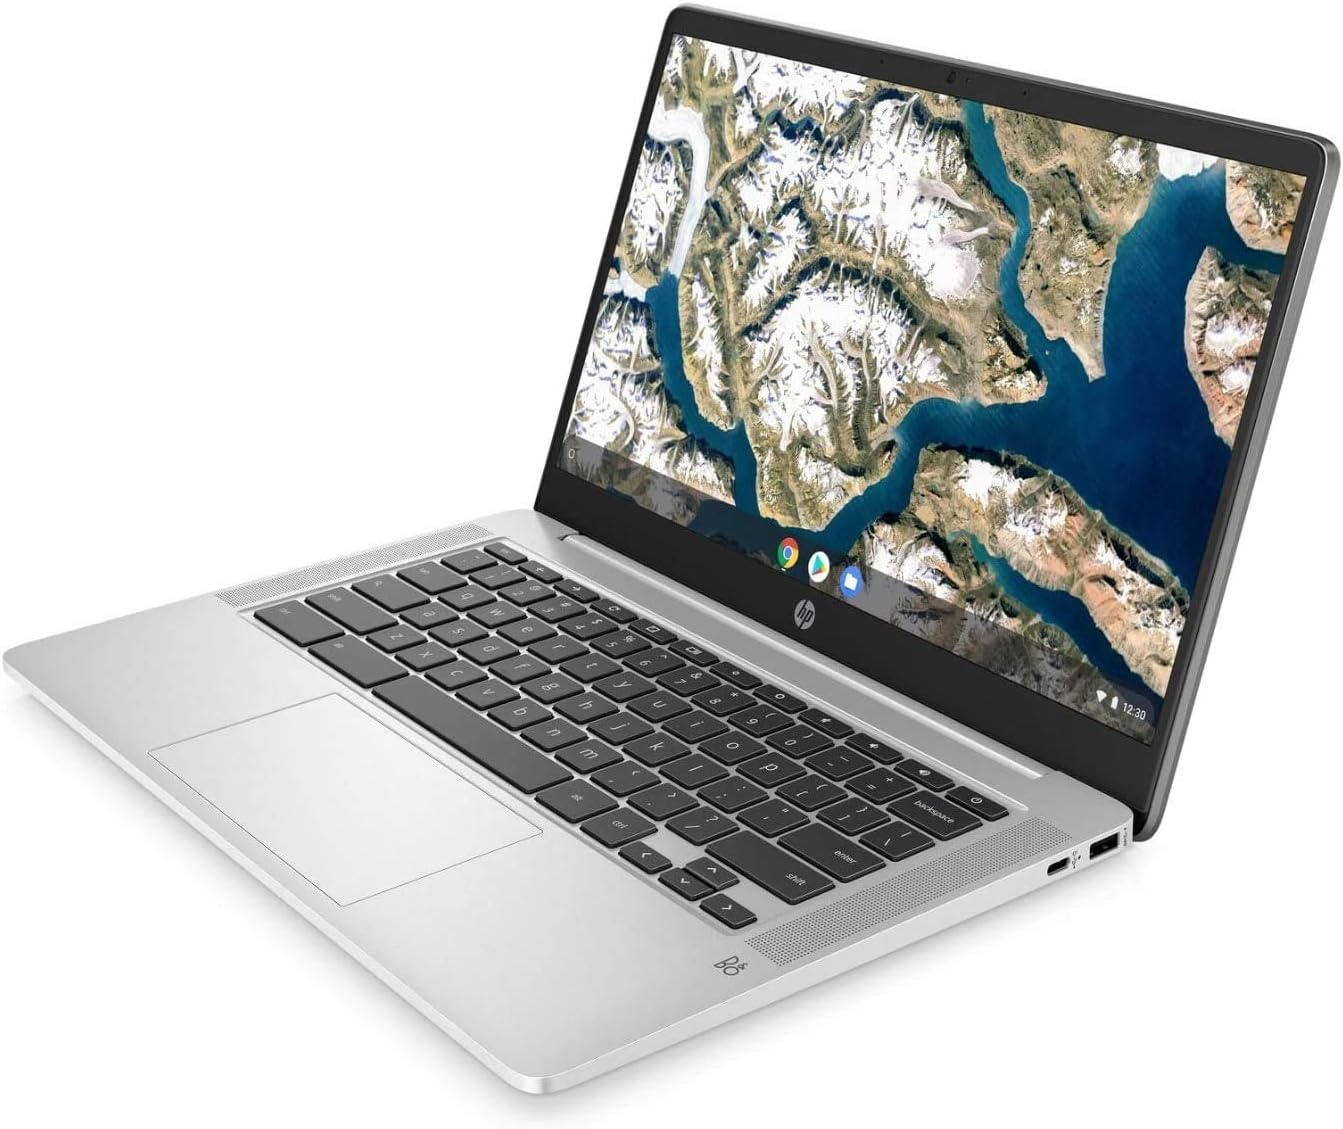 HP x360 14a-ca0036nr 14" HD Touchscreen 2 in 1 Chromebook, Intel Celeron N4020, 4GB, 64GB, Chrome OS, 18W55UA